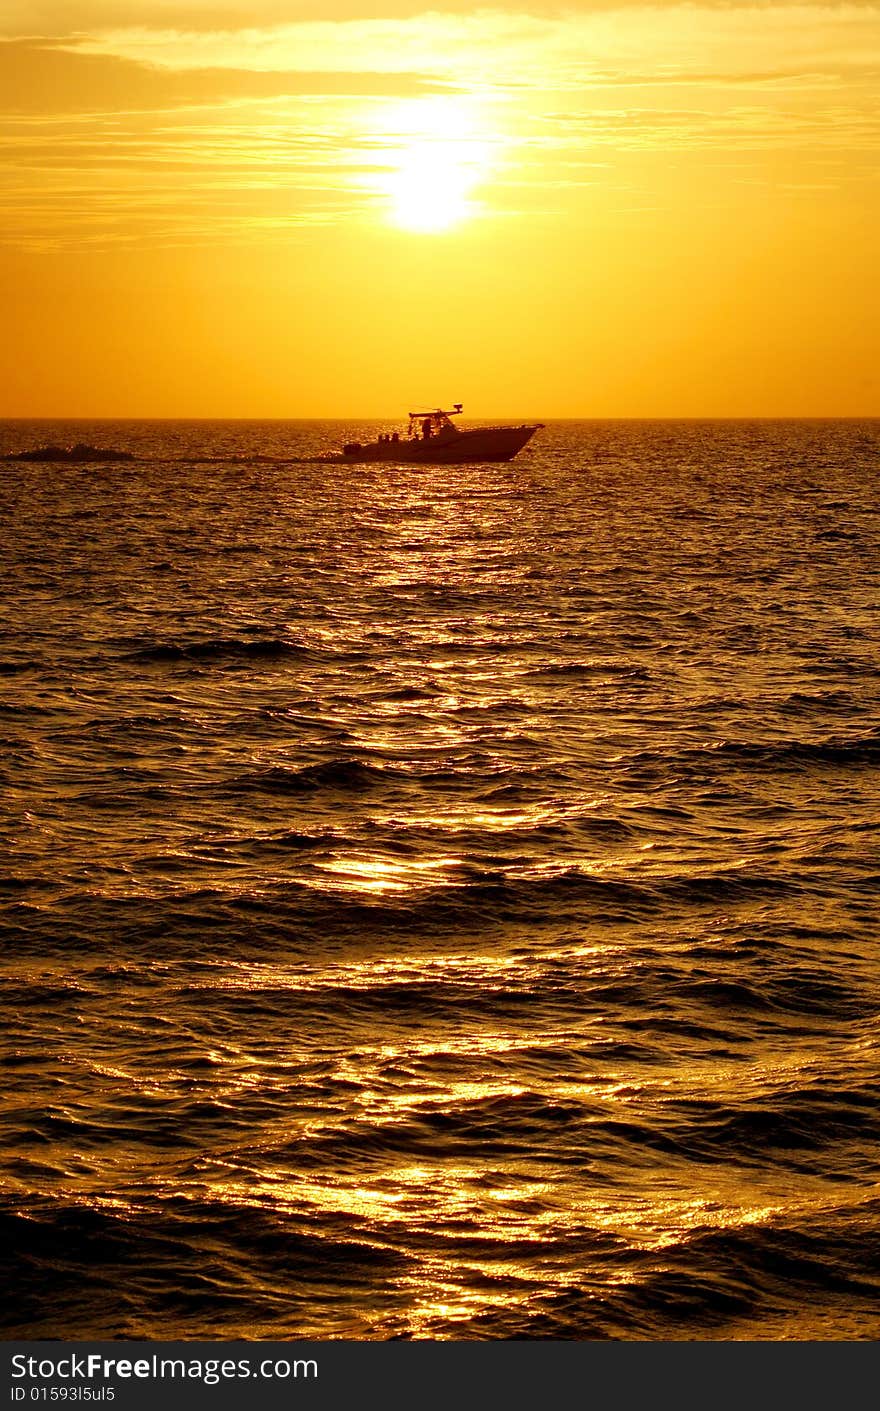 Scooner at sunset on the Florida coast